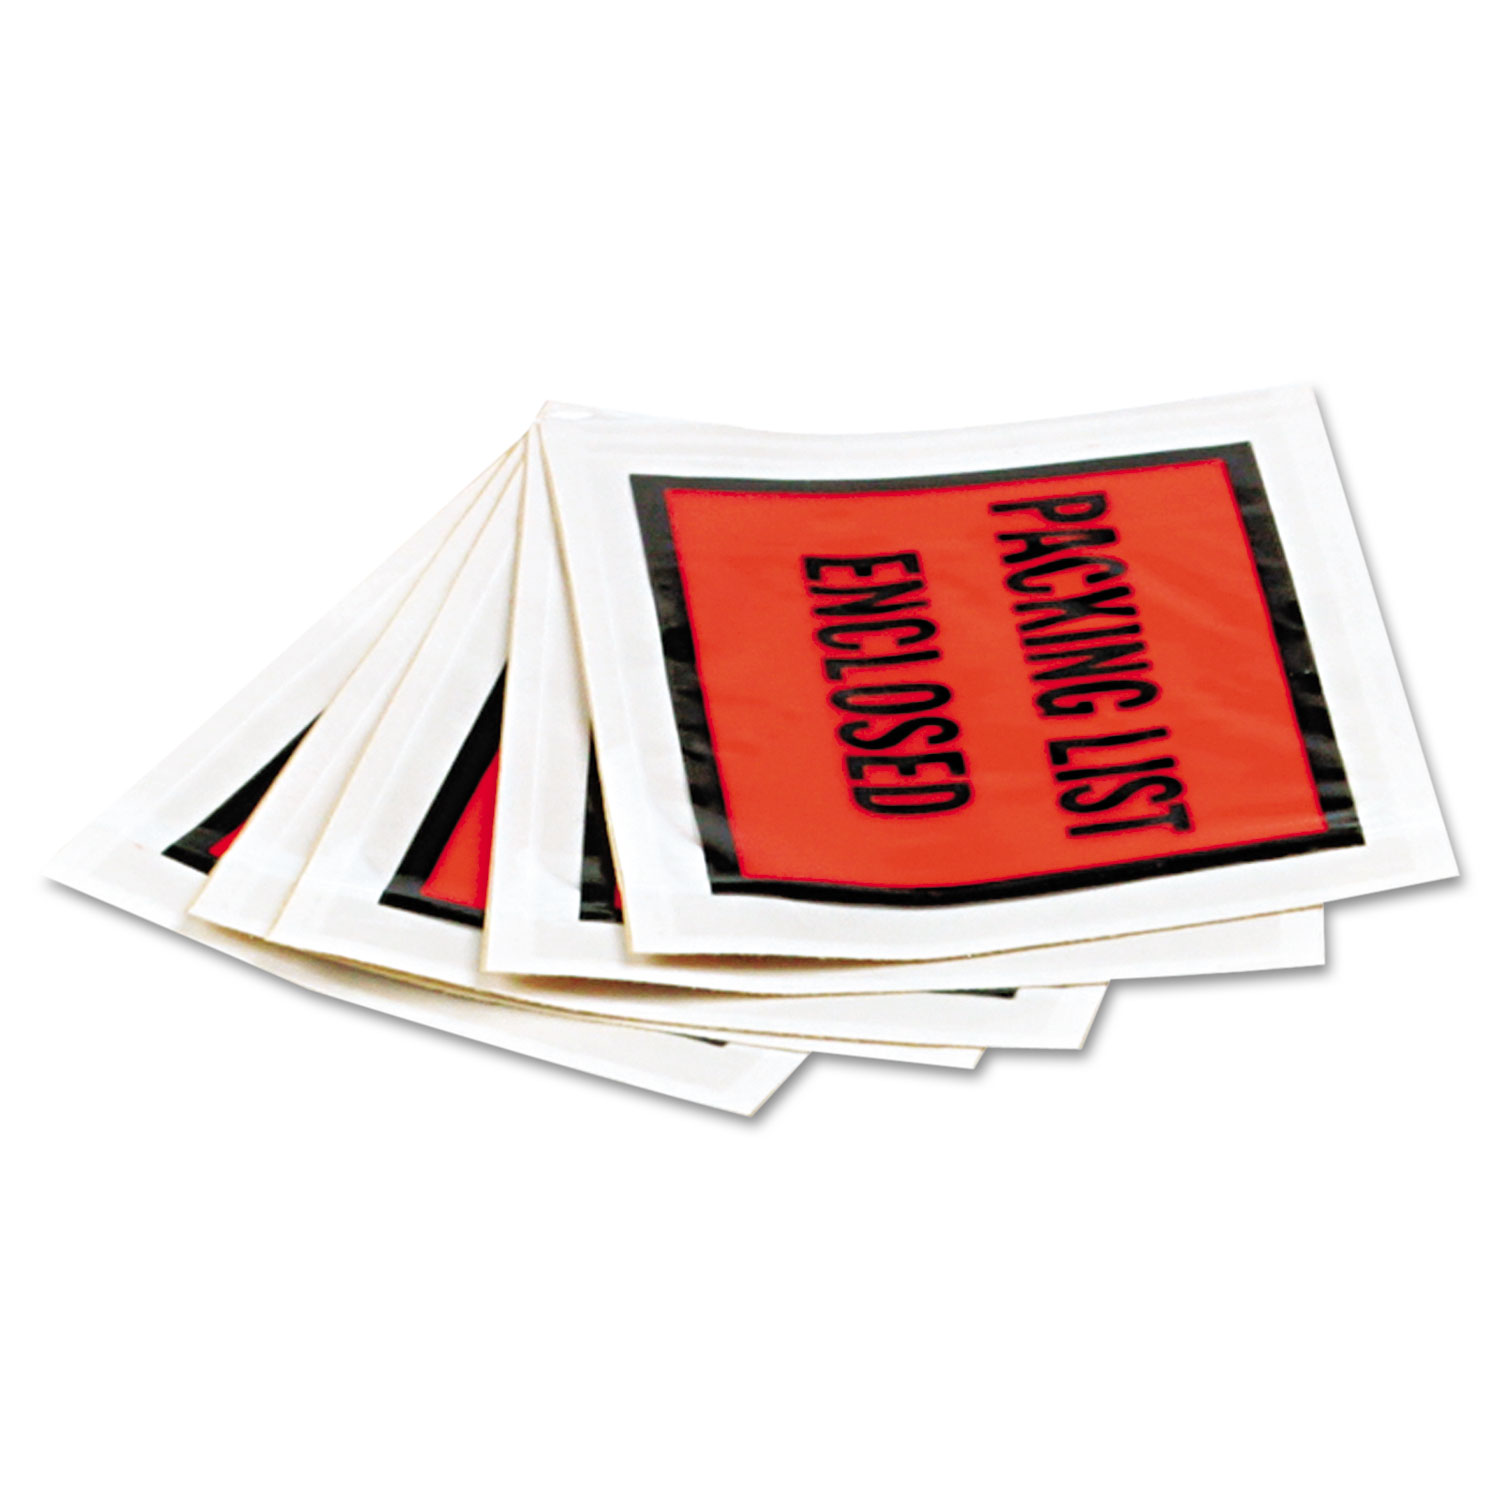 Full Print Self Adhesive Packing List Envelope, Orange, 5 1/2 x 4 1/2, 1000/Box